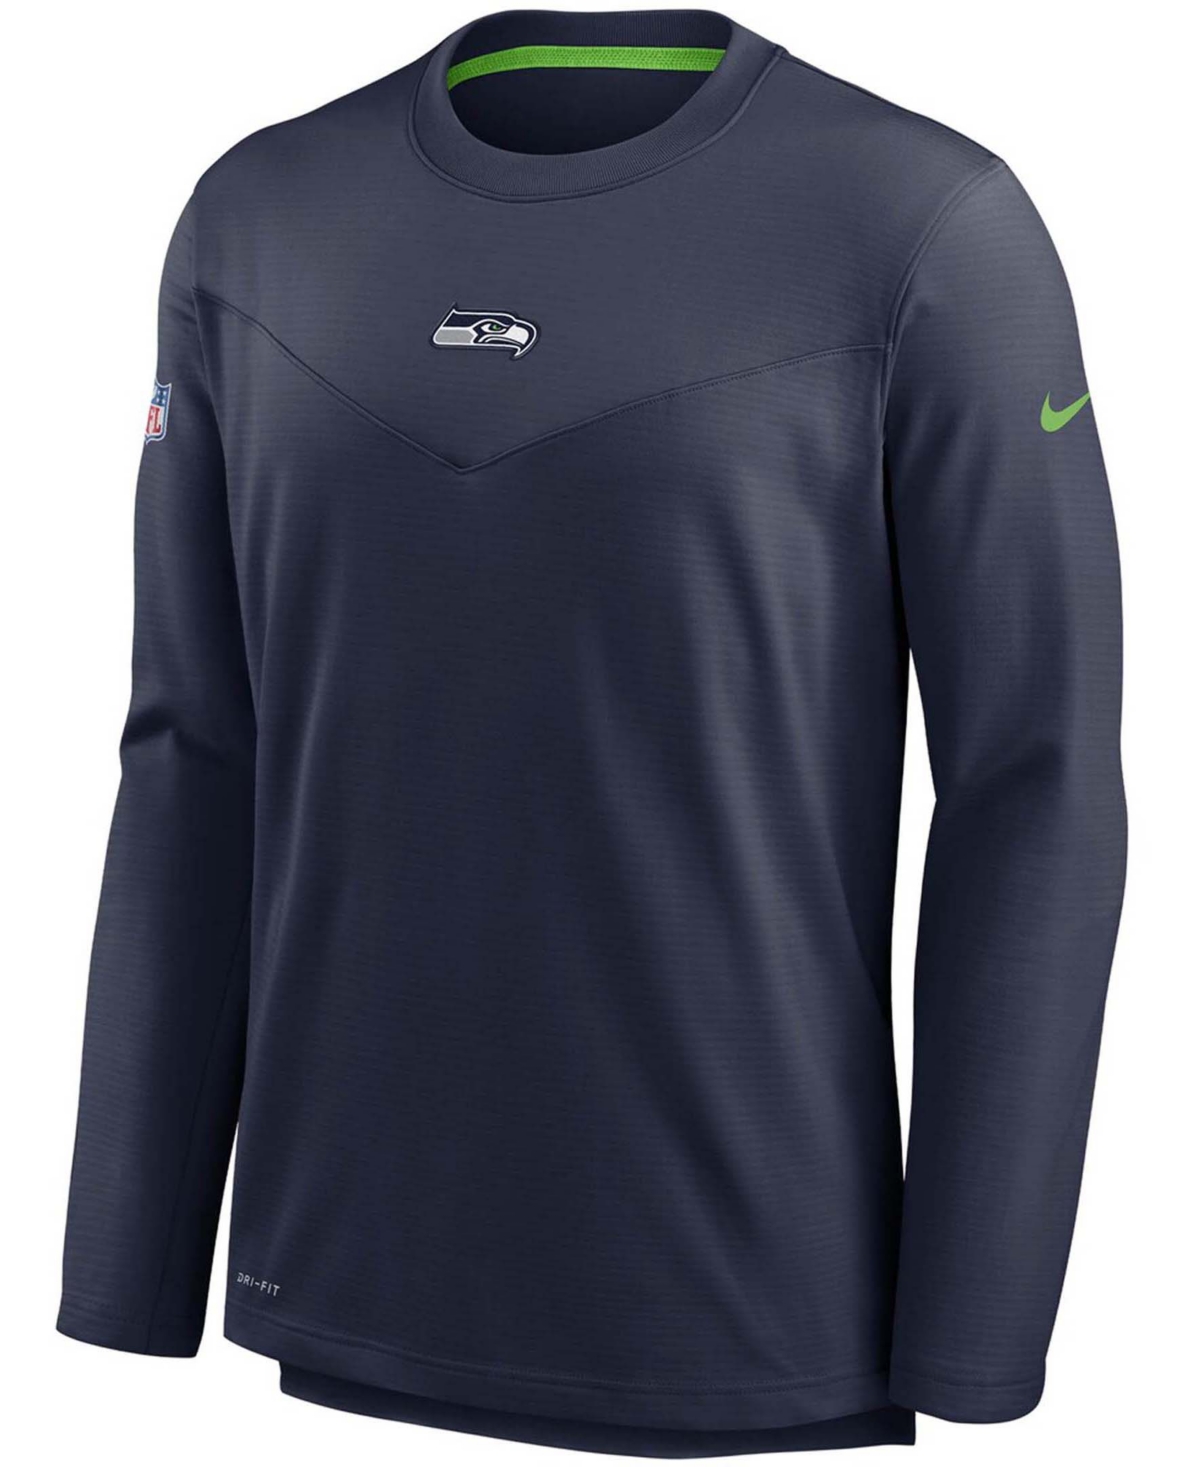 Shop Nike Men's College Navy Seattle Seahawks Sideline Team Performance Pullover Sweatshirt